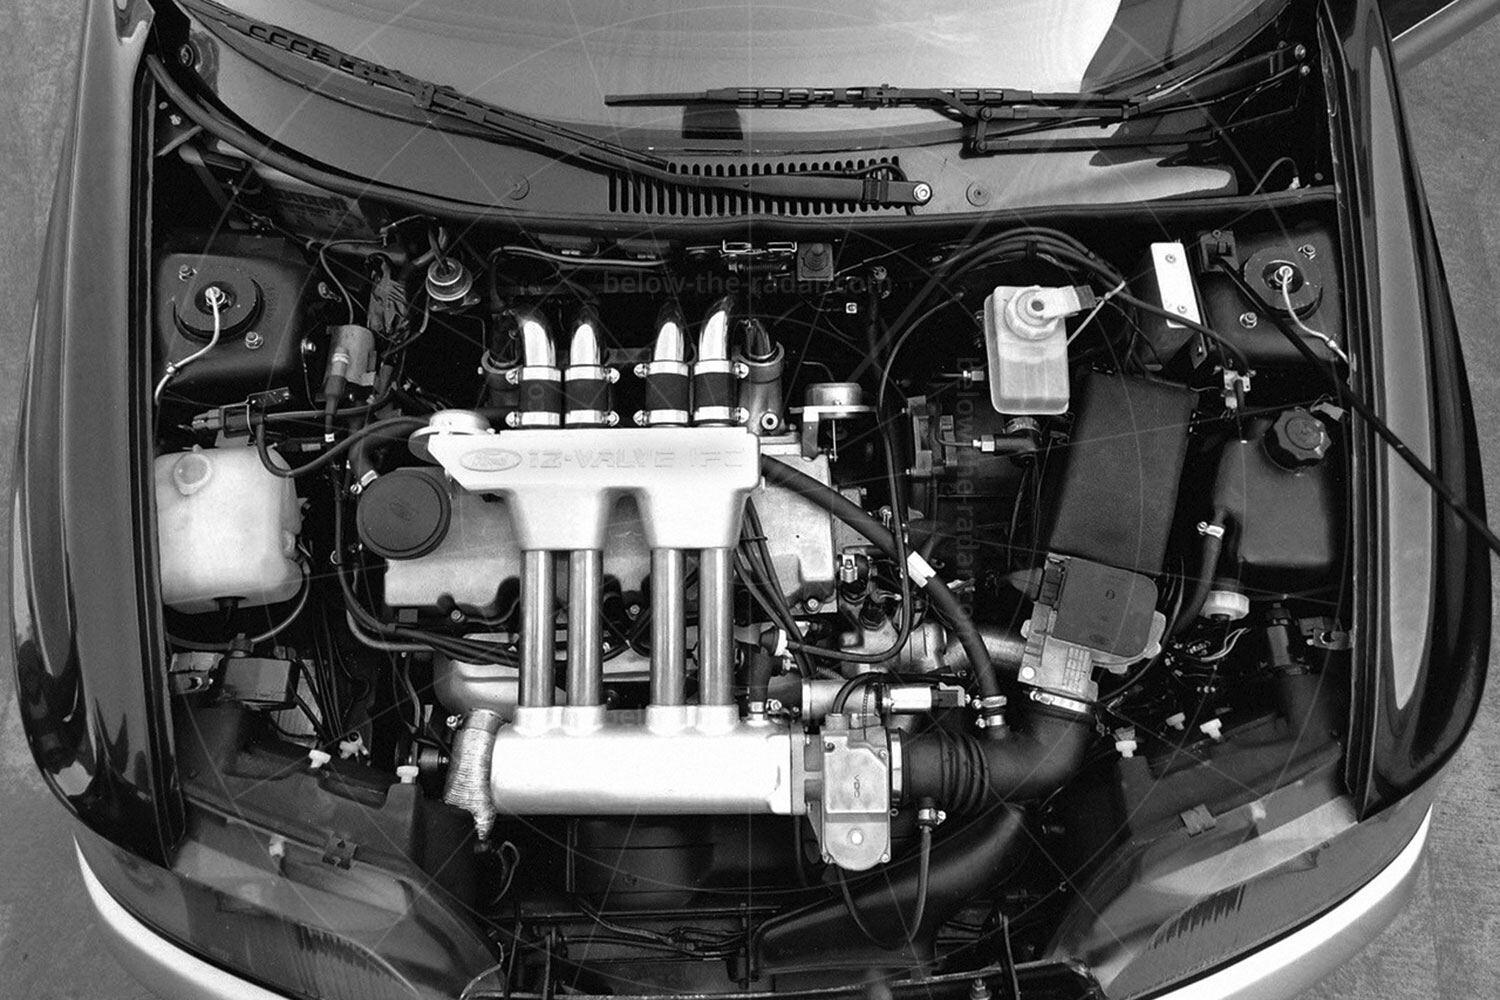 Ford Eltec engine bay Pic: Ford | Ford Eltec engine bay